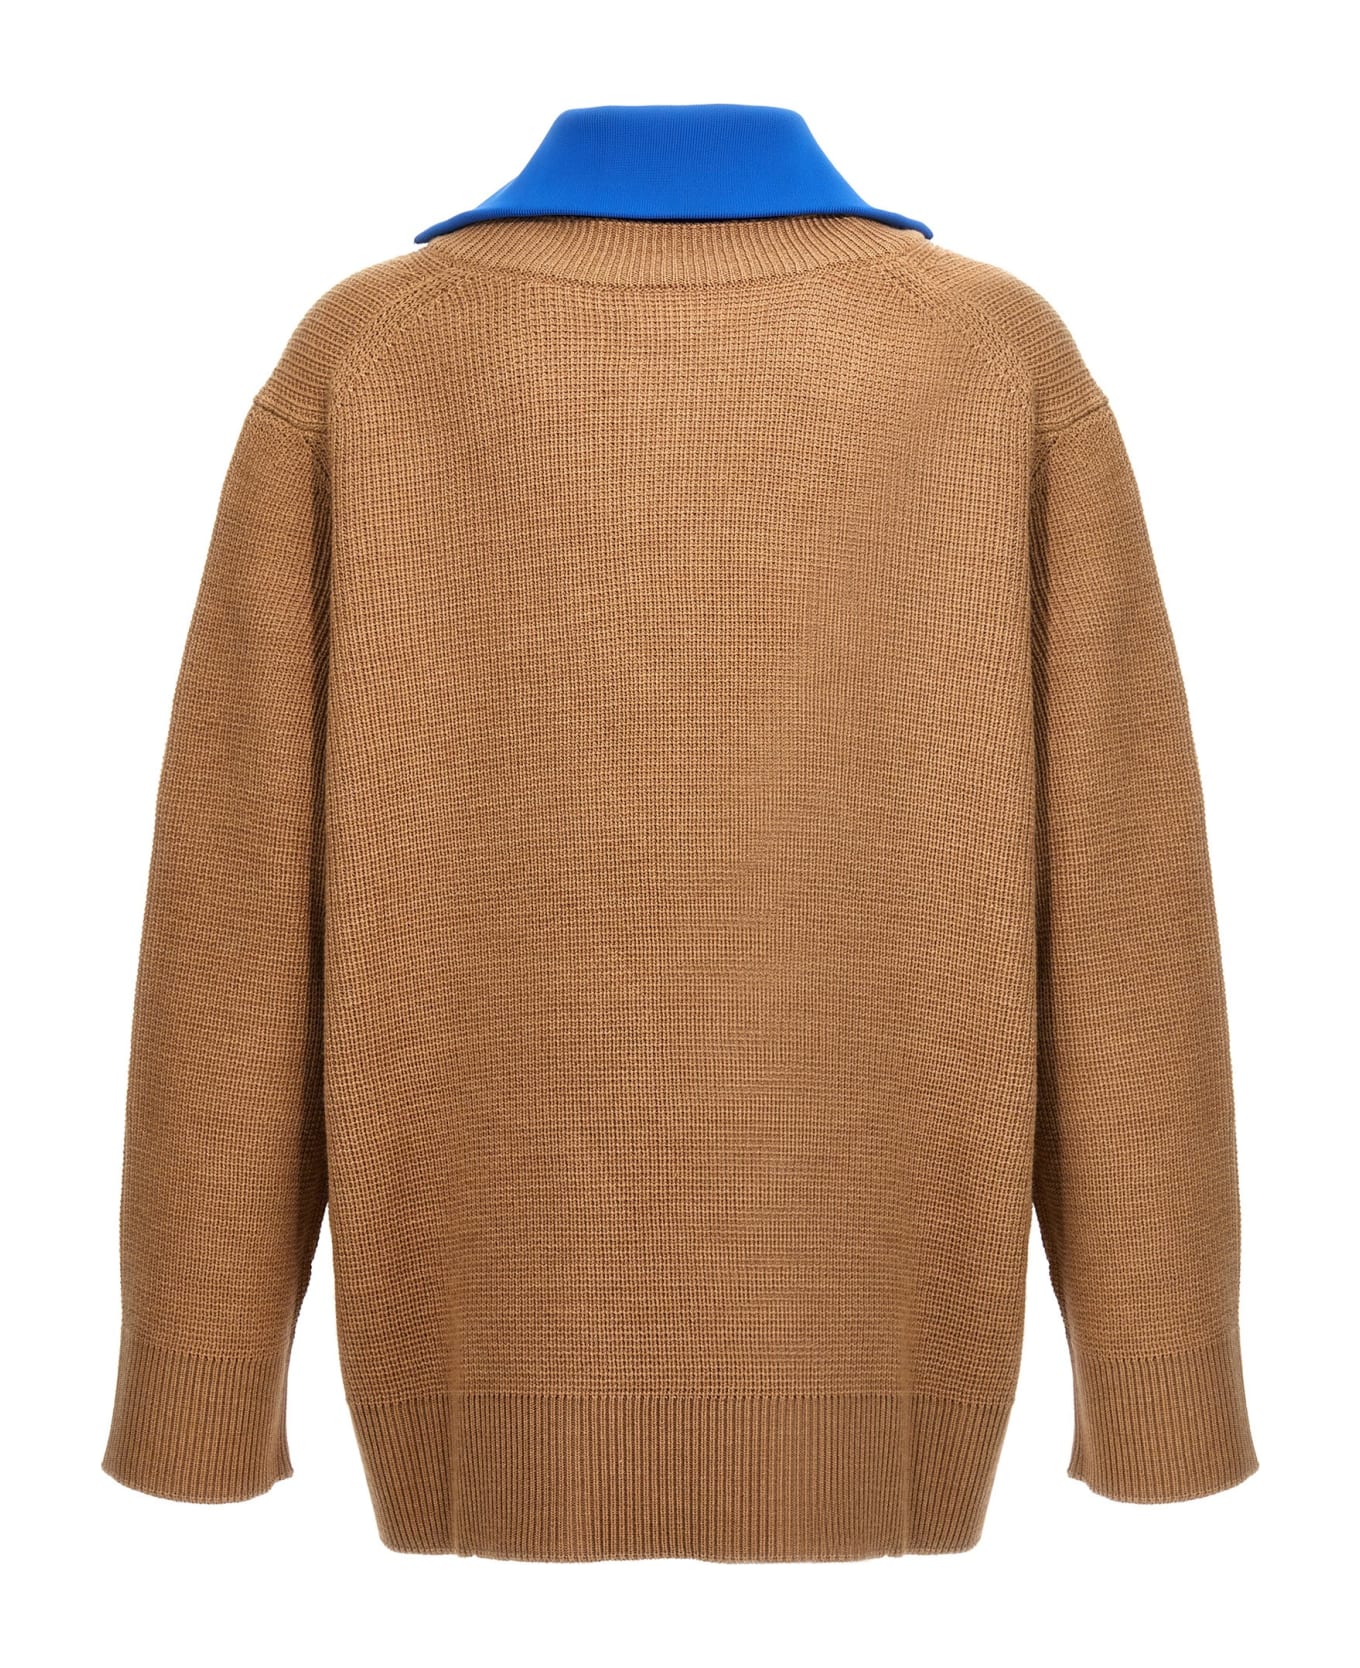 Jil Sander Half Zip Sweater - Multicolor ニットウェア